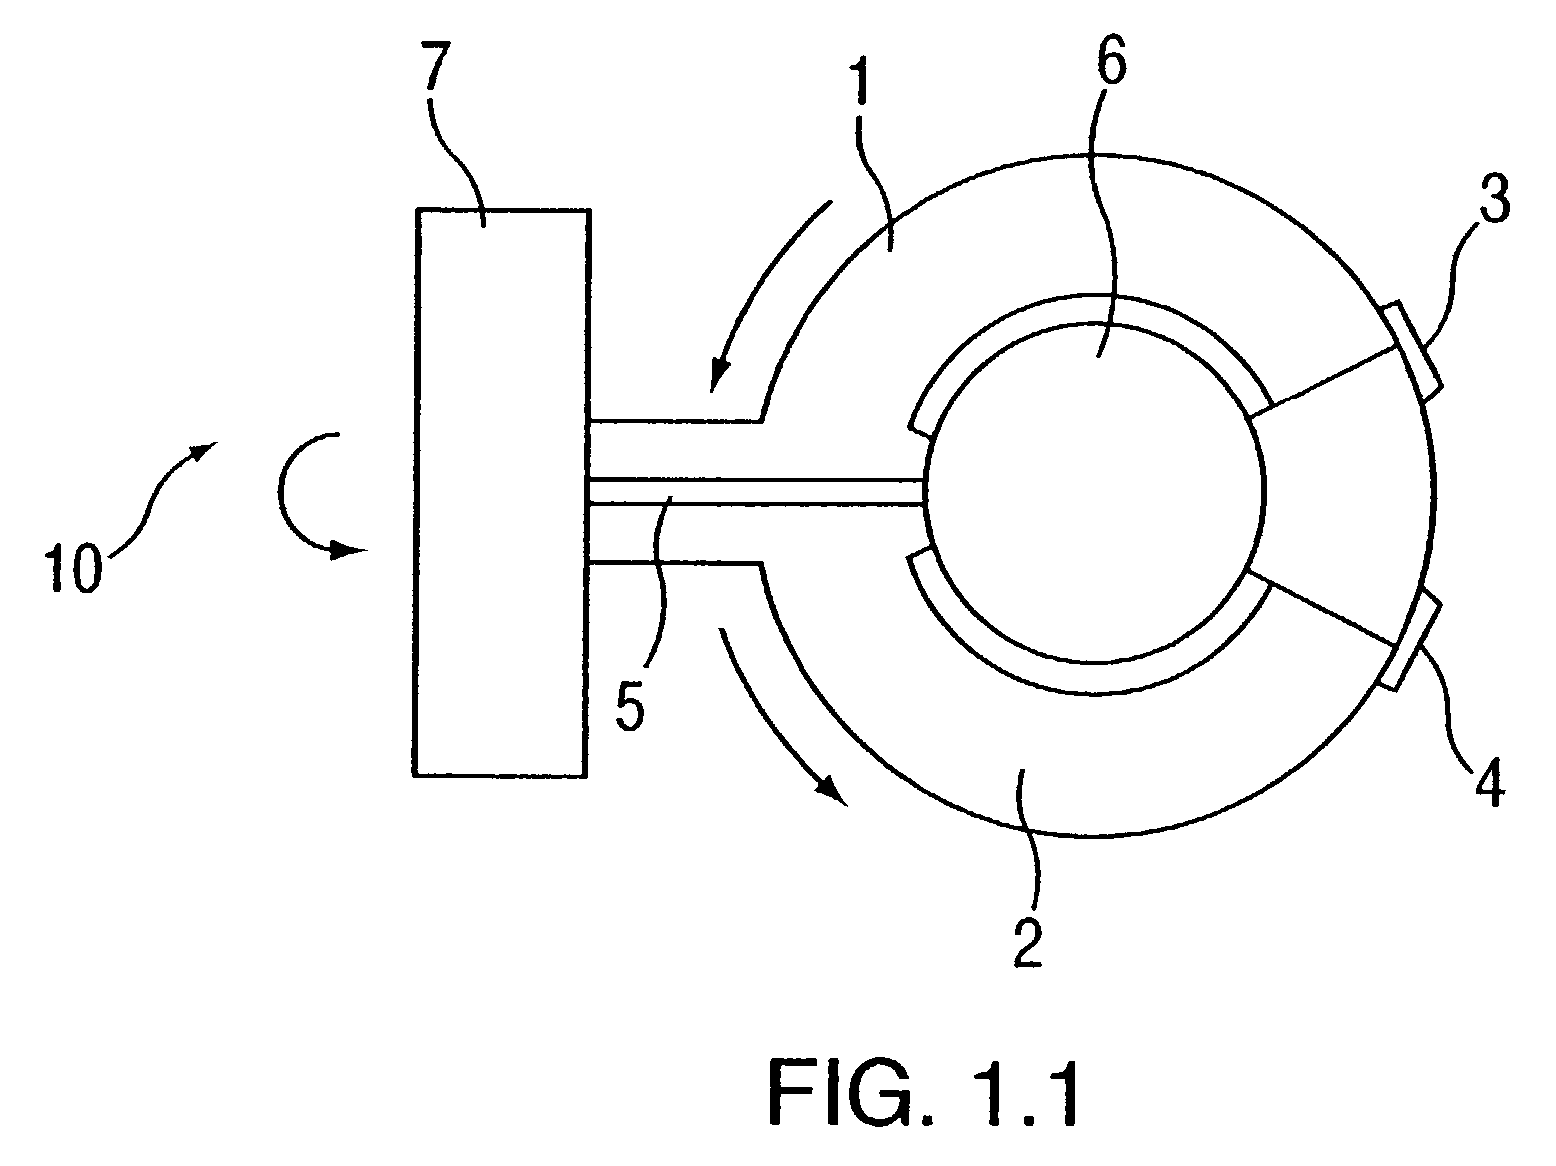 Rotary piezoelectric microactuator with an optimum suspension arrangement